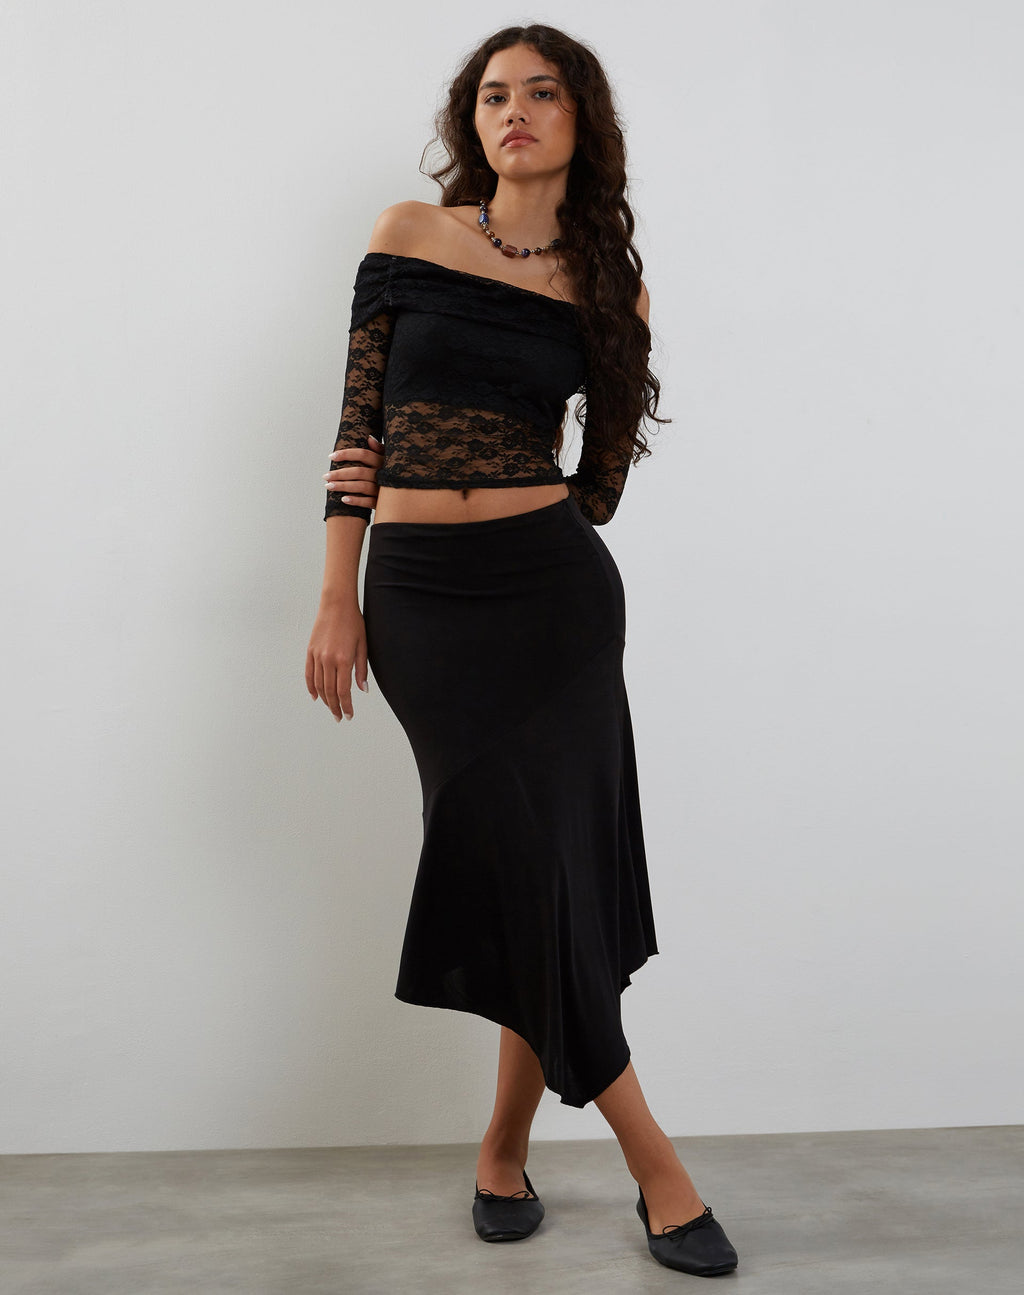 Nixie Long Sleeve Bardot Top in Lace Black